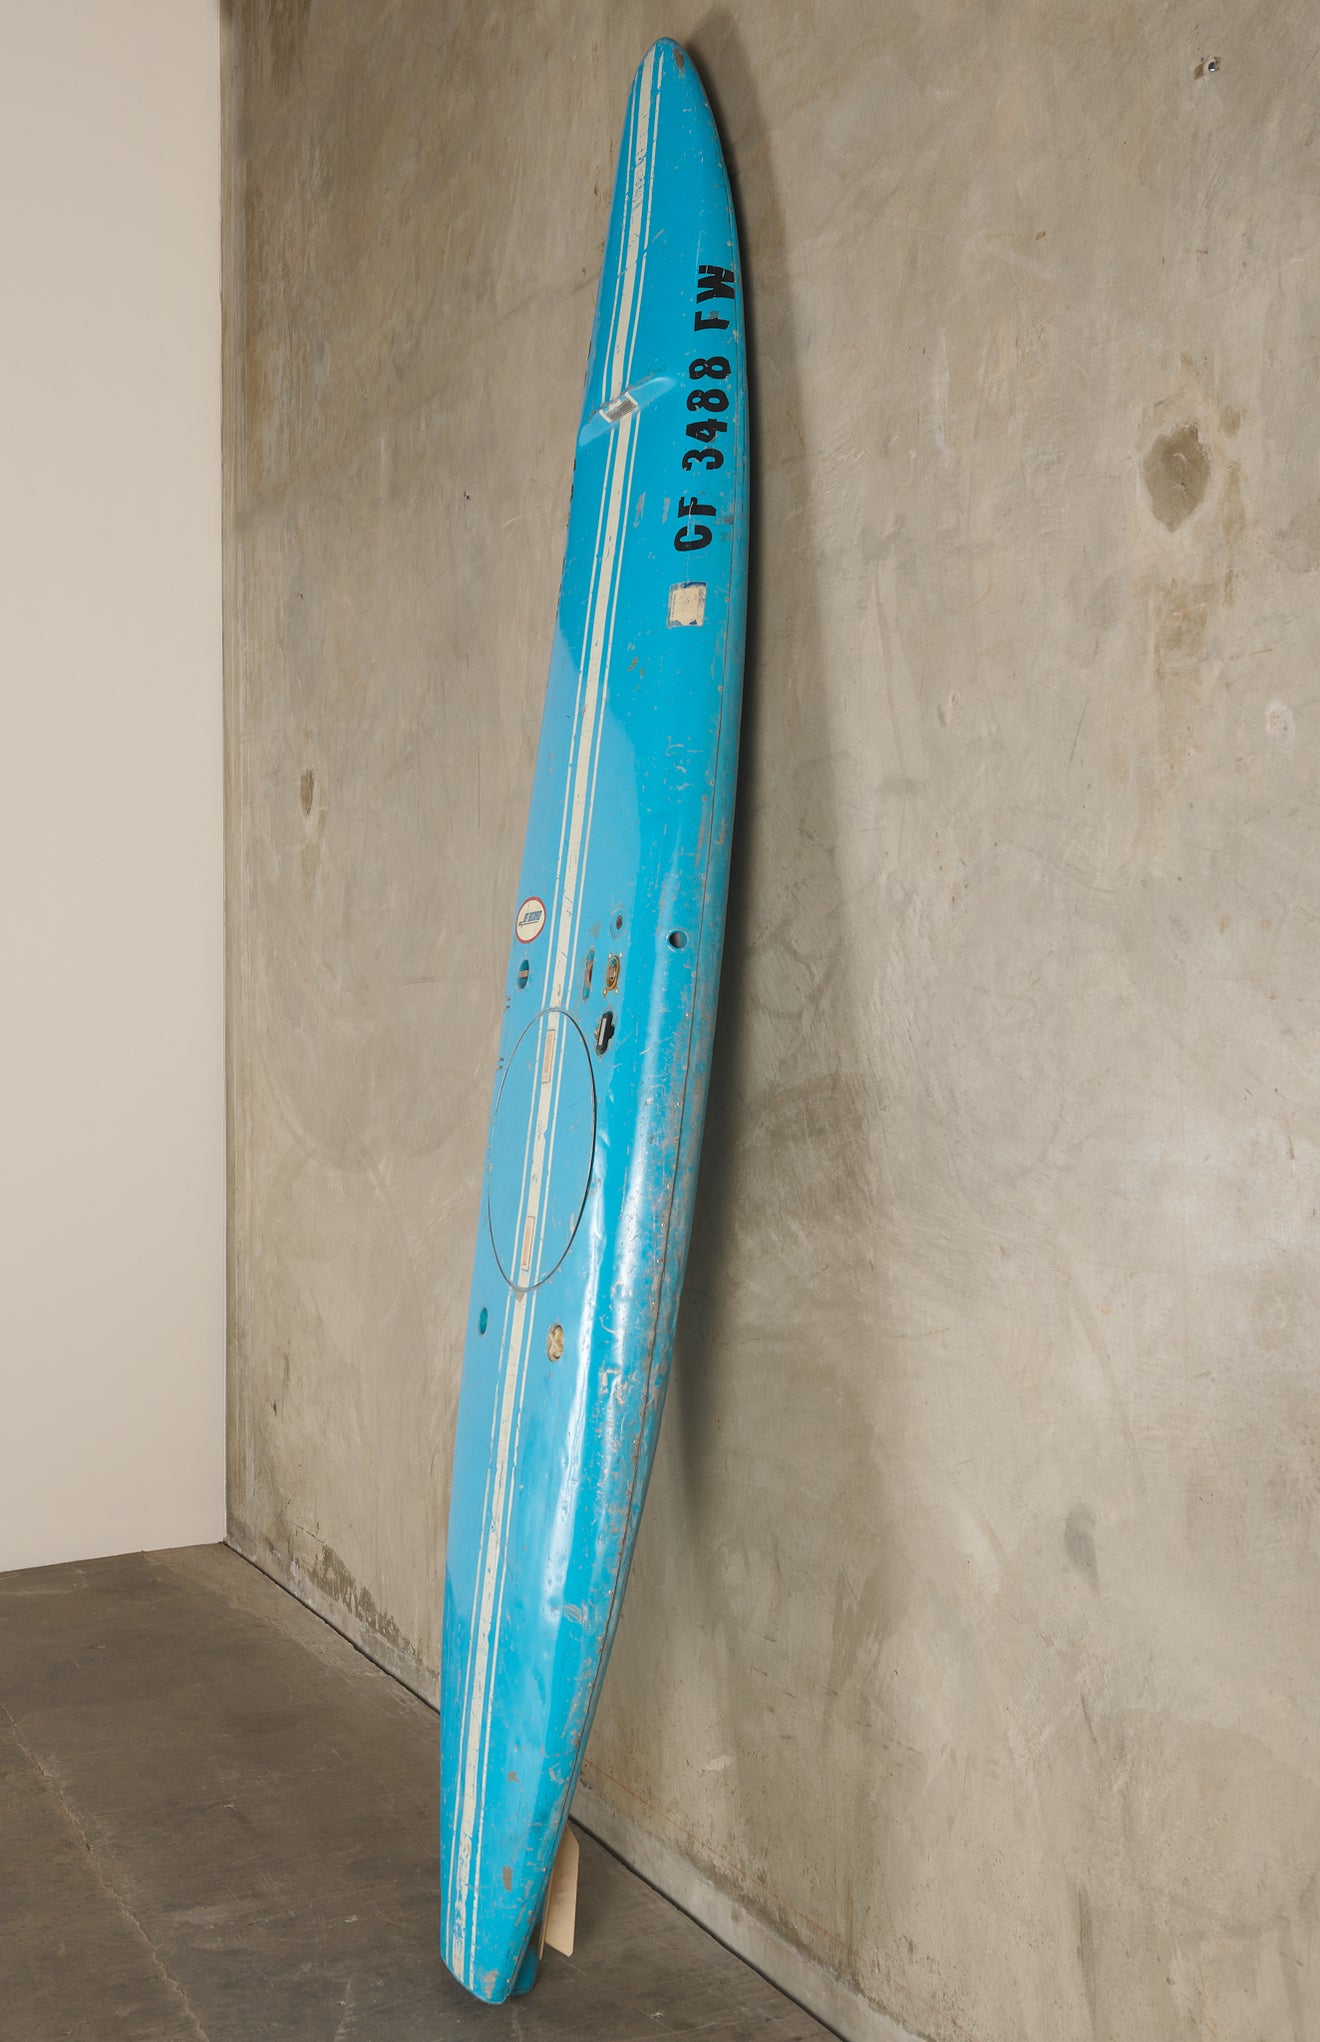 BLUE JETBOARD MOTORIZED SURFBOARD BY SARGENT FLETCHER CO